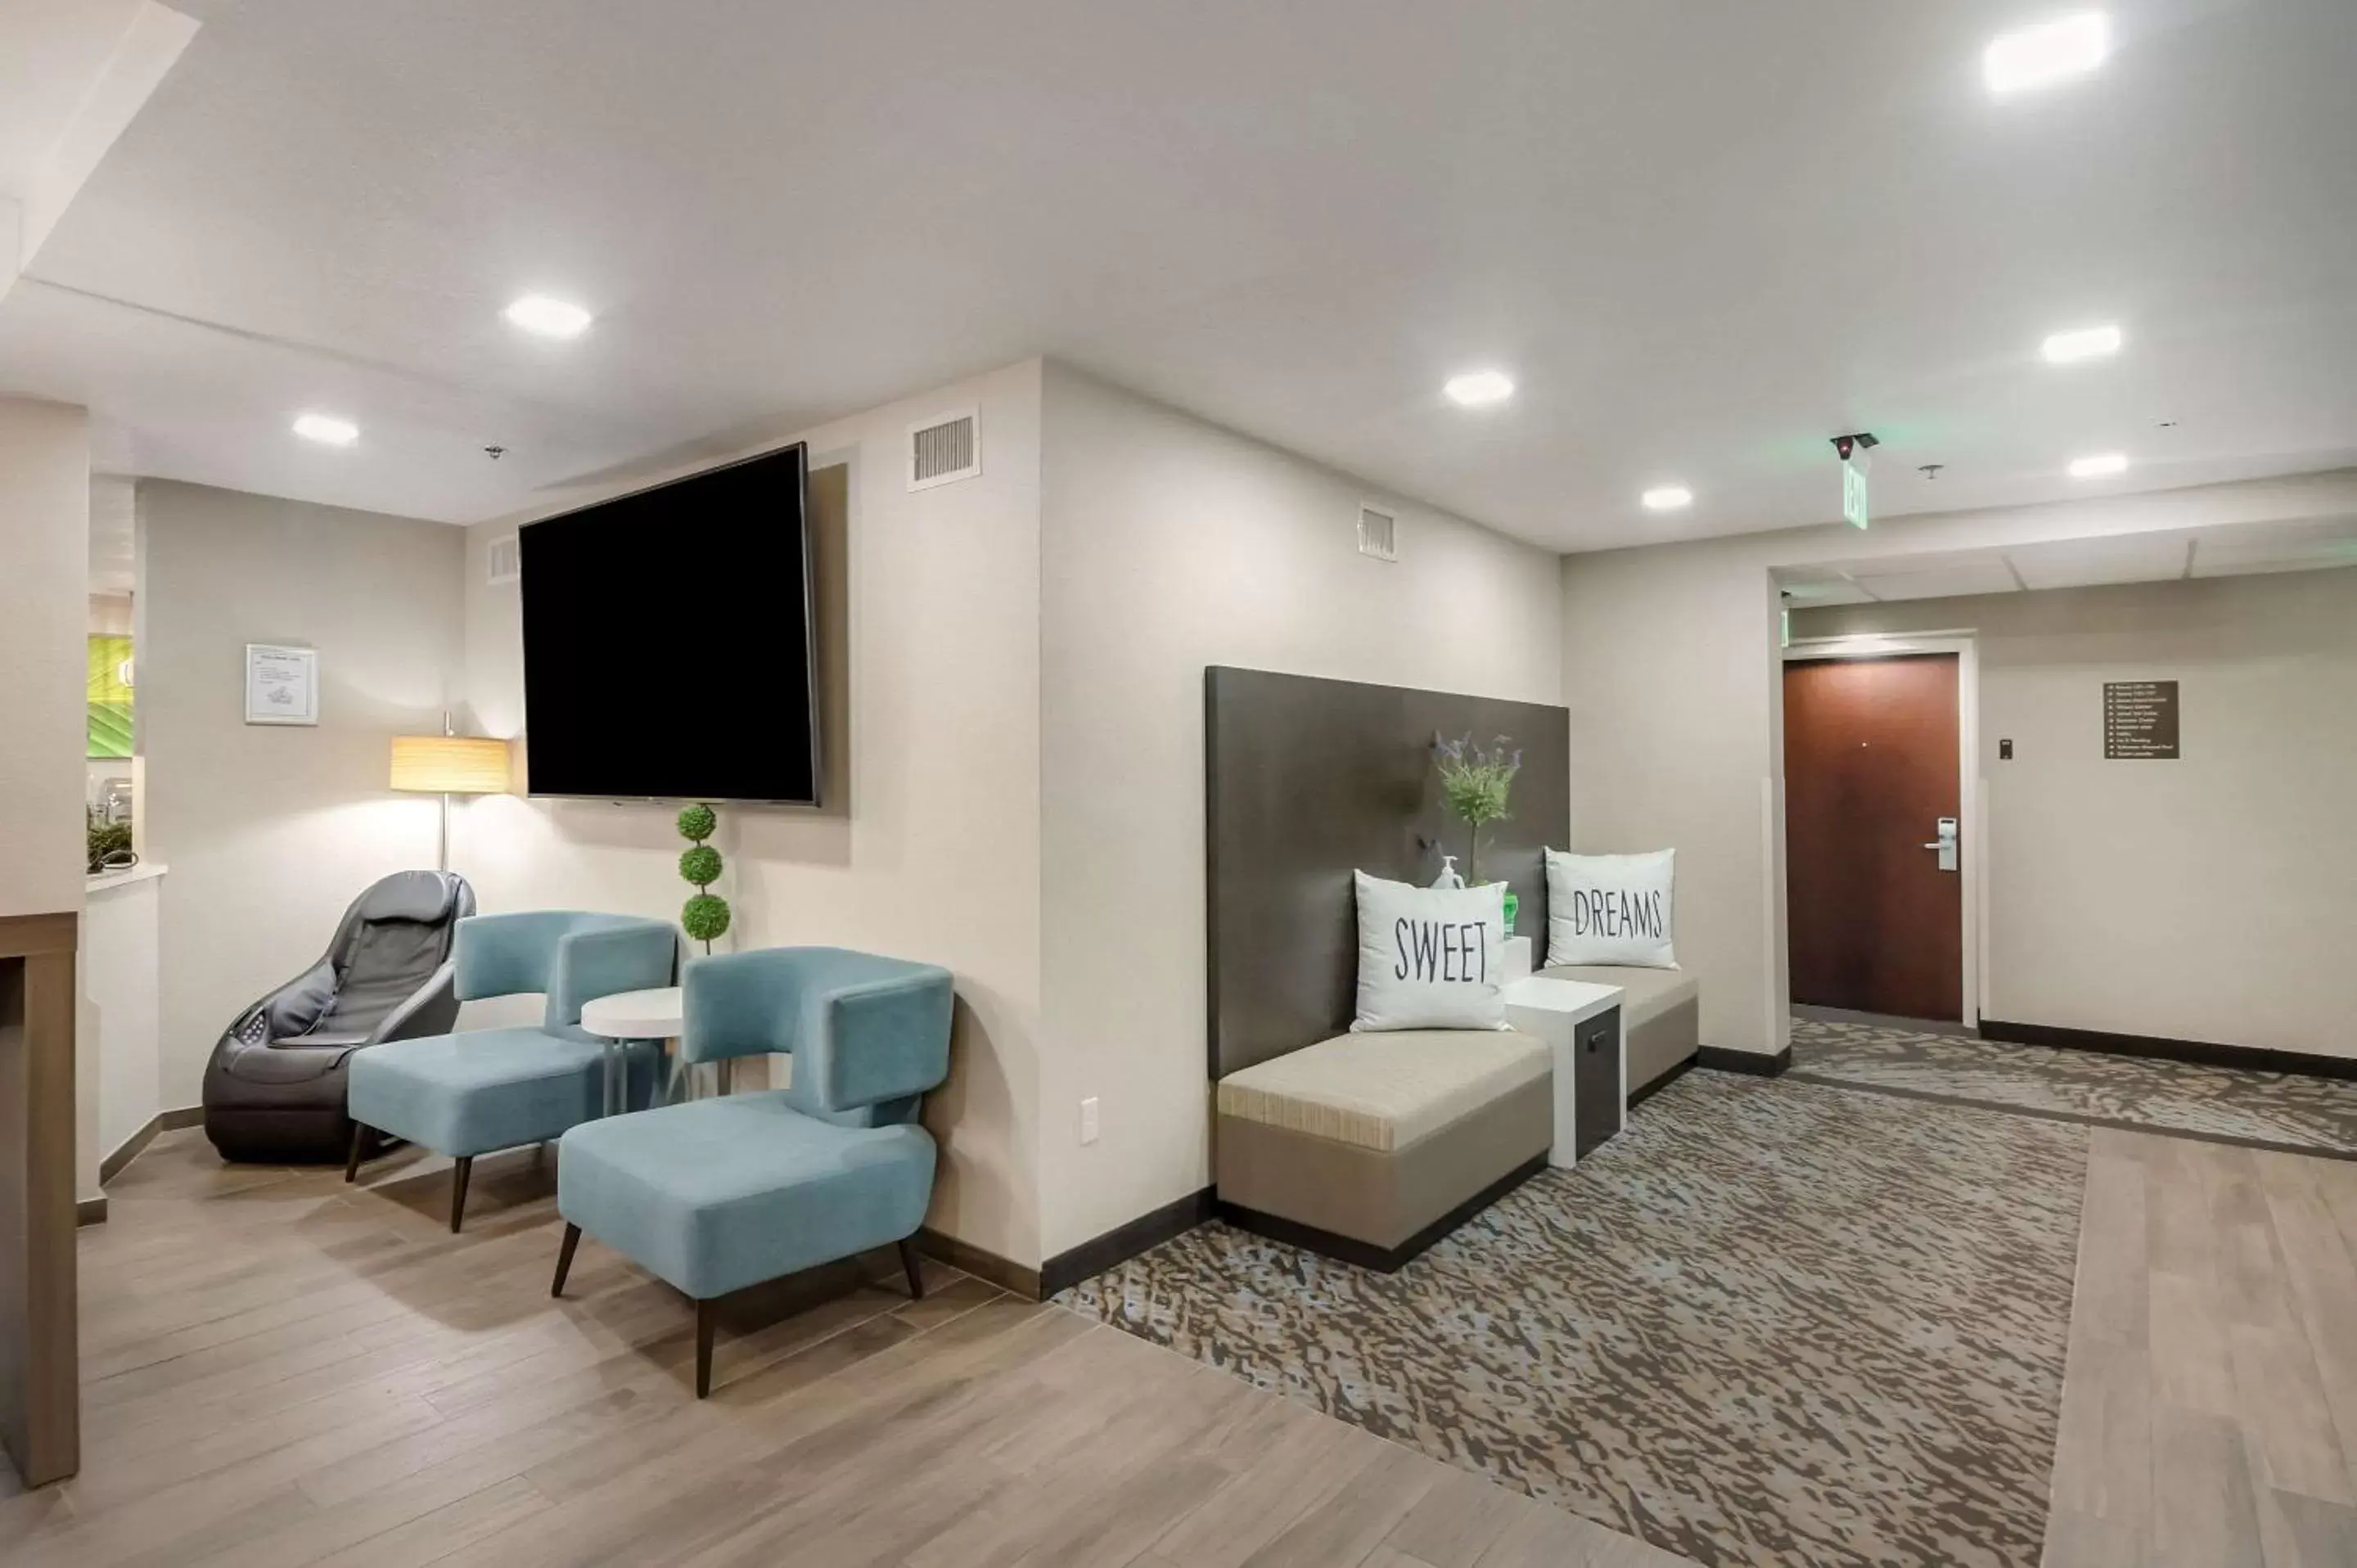 Lobby or reception in Sleep Inn & Suites